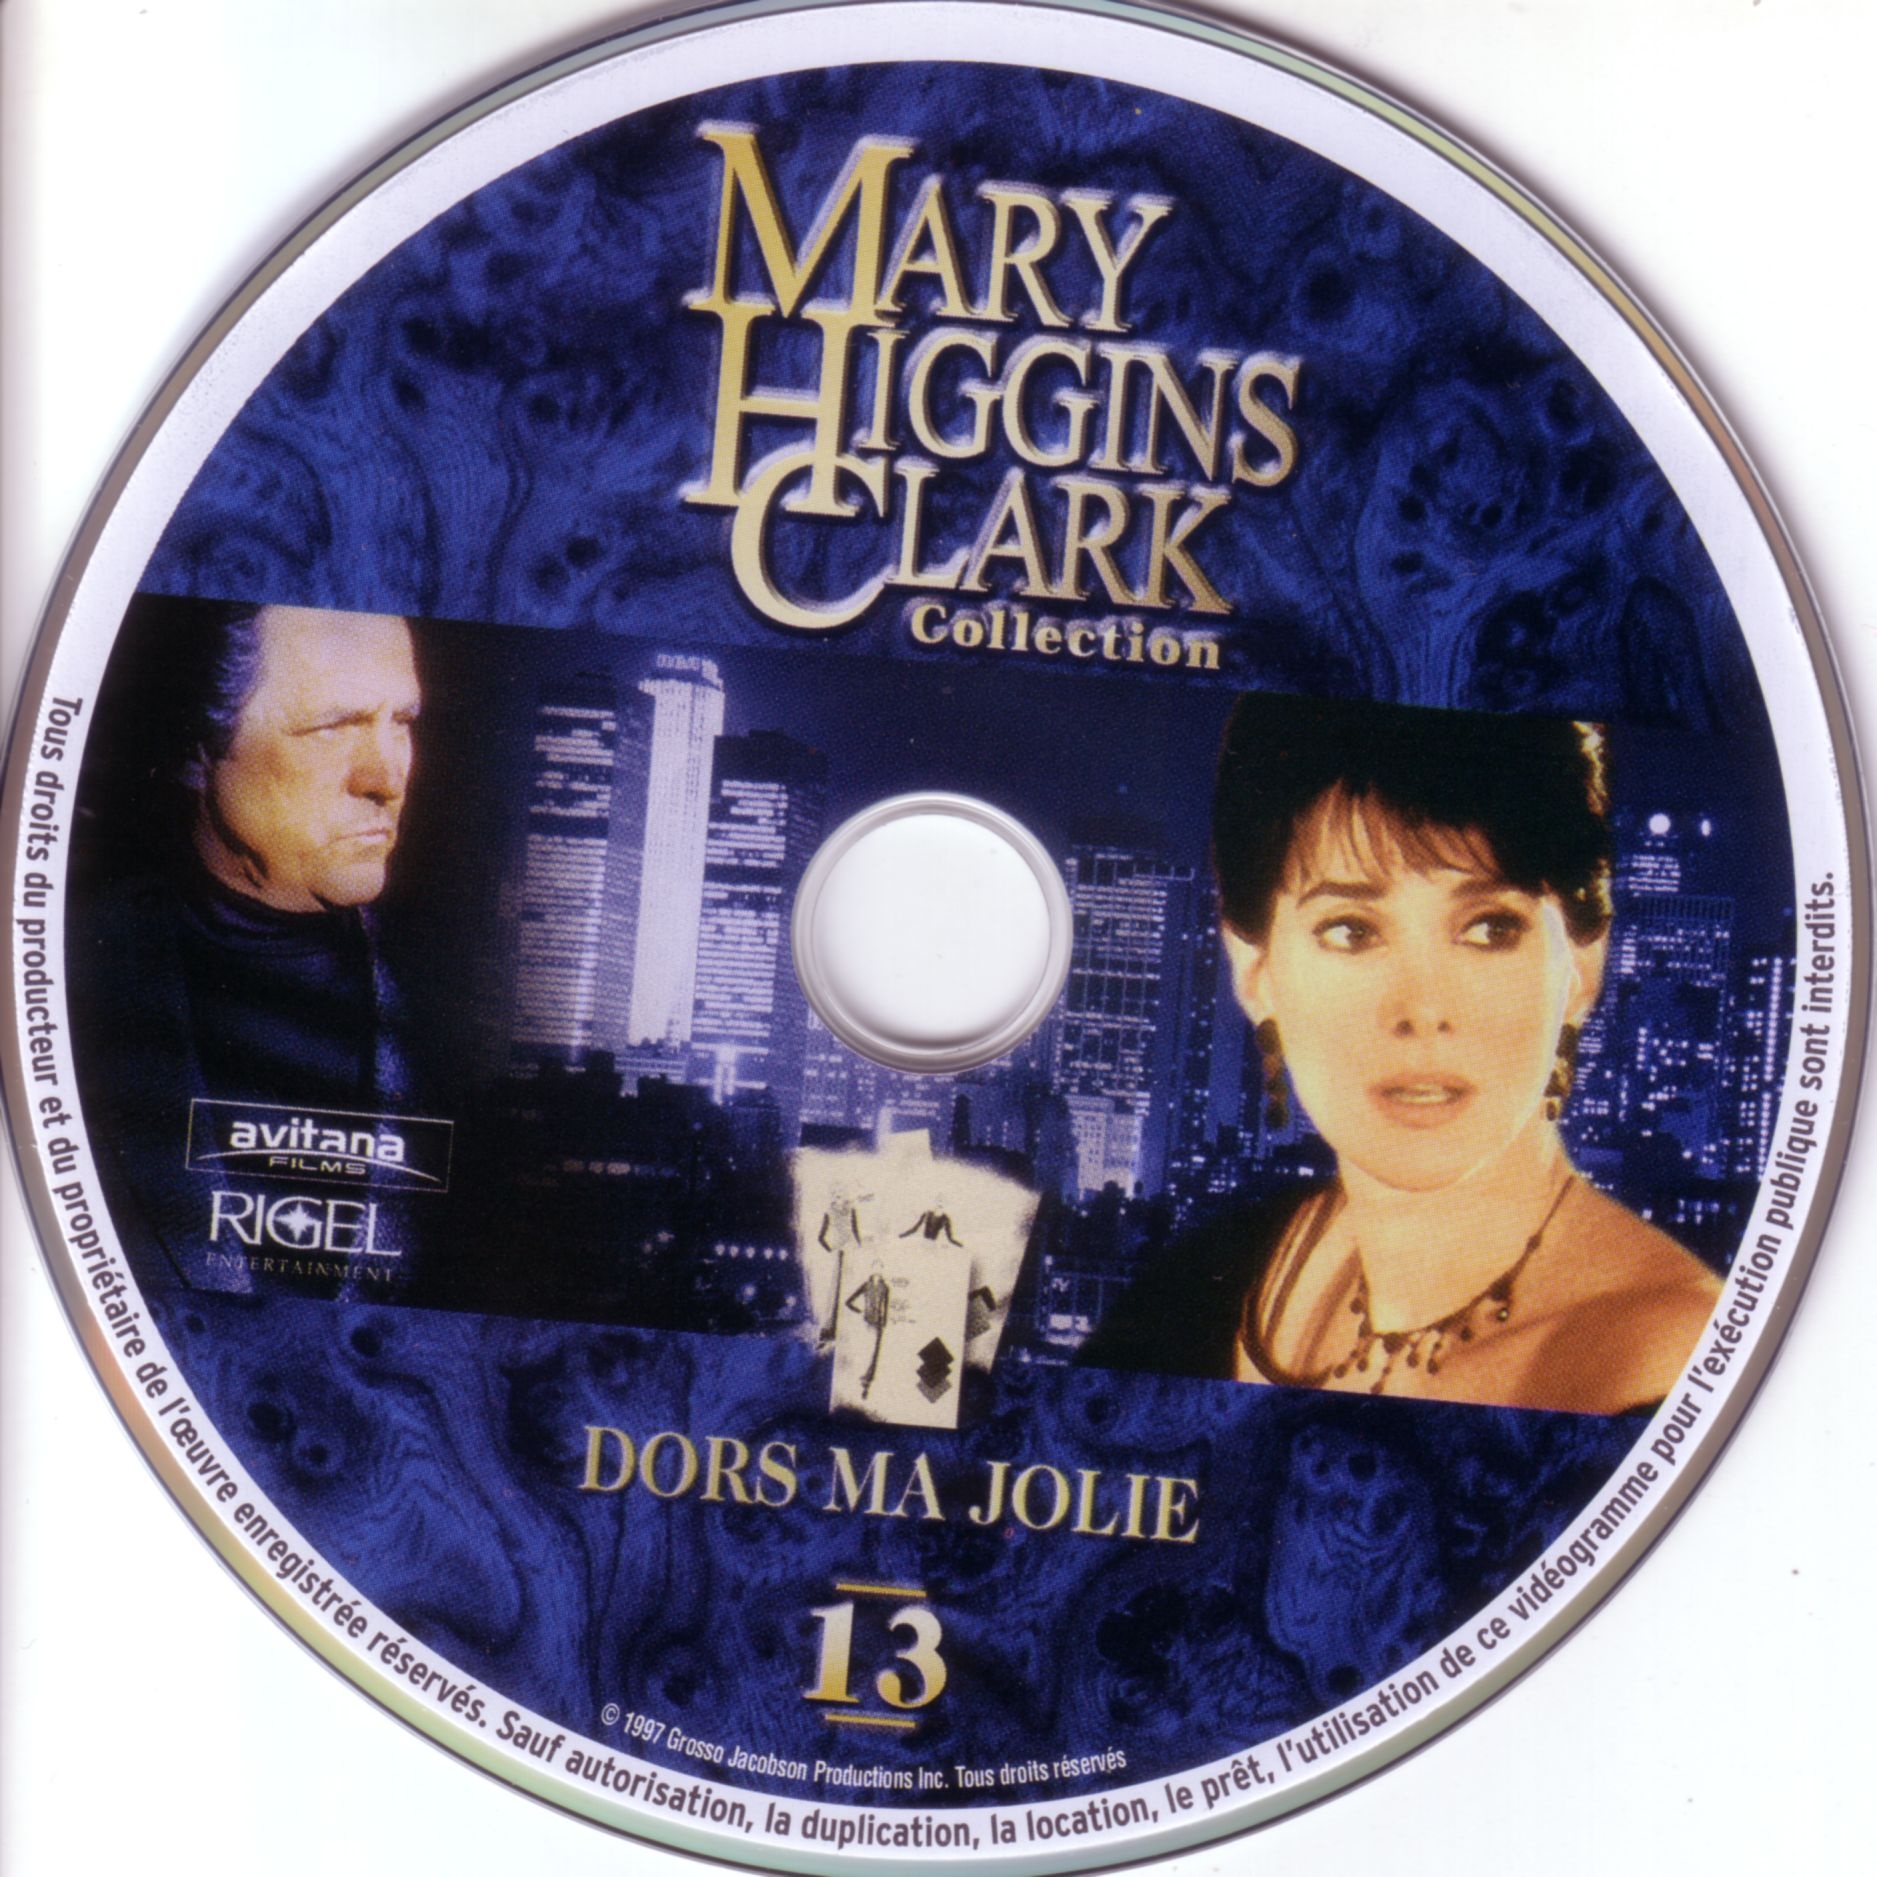 Mary Higgins Clark vol 13 - Dors ma jolie